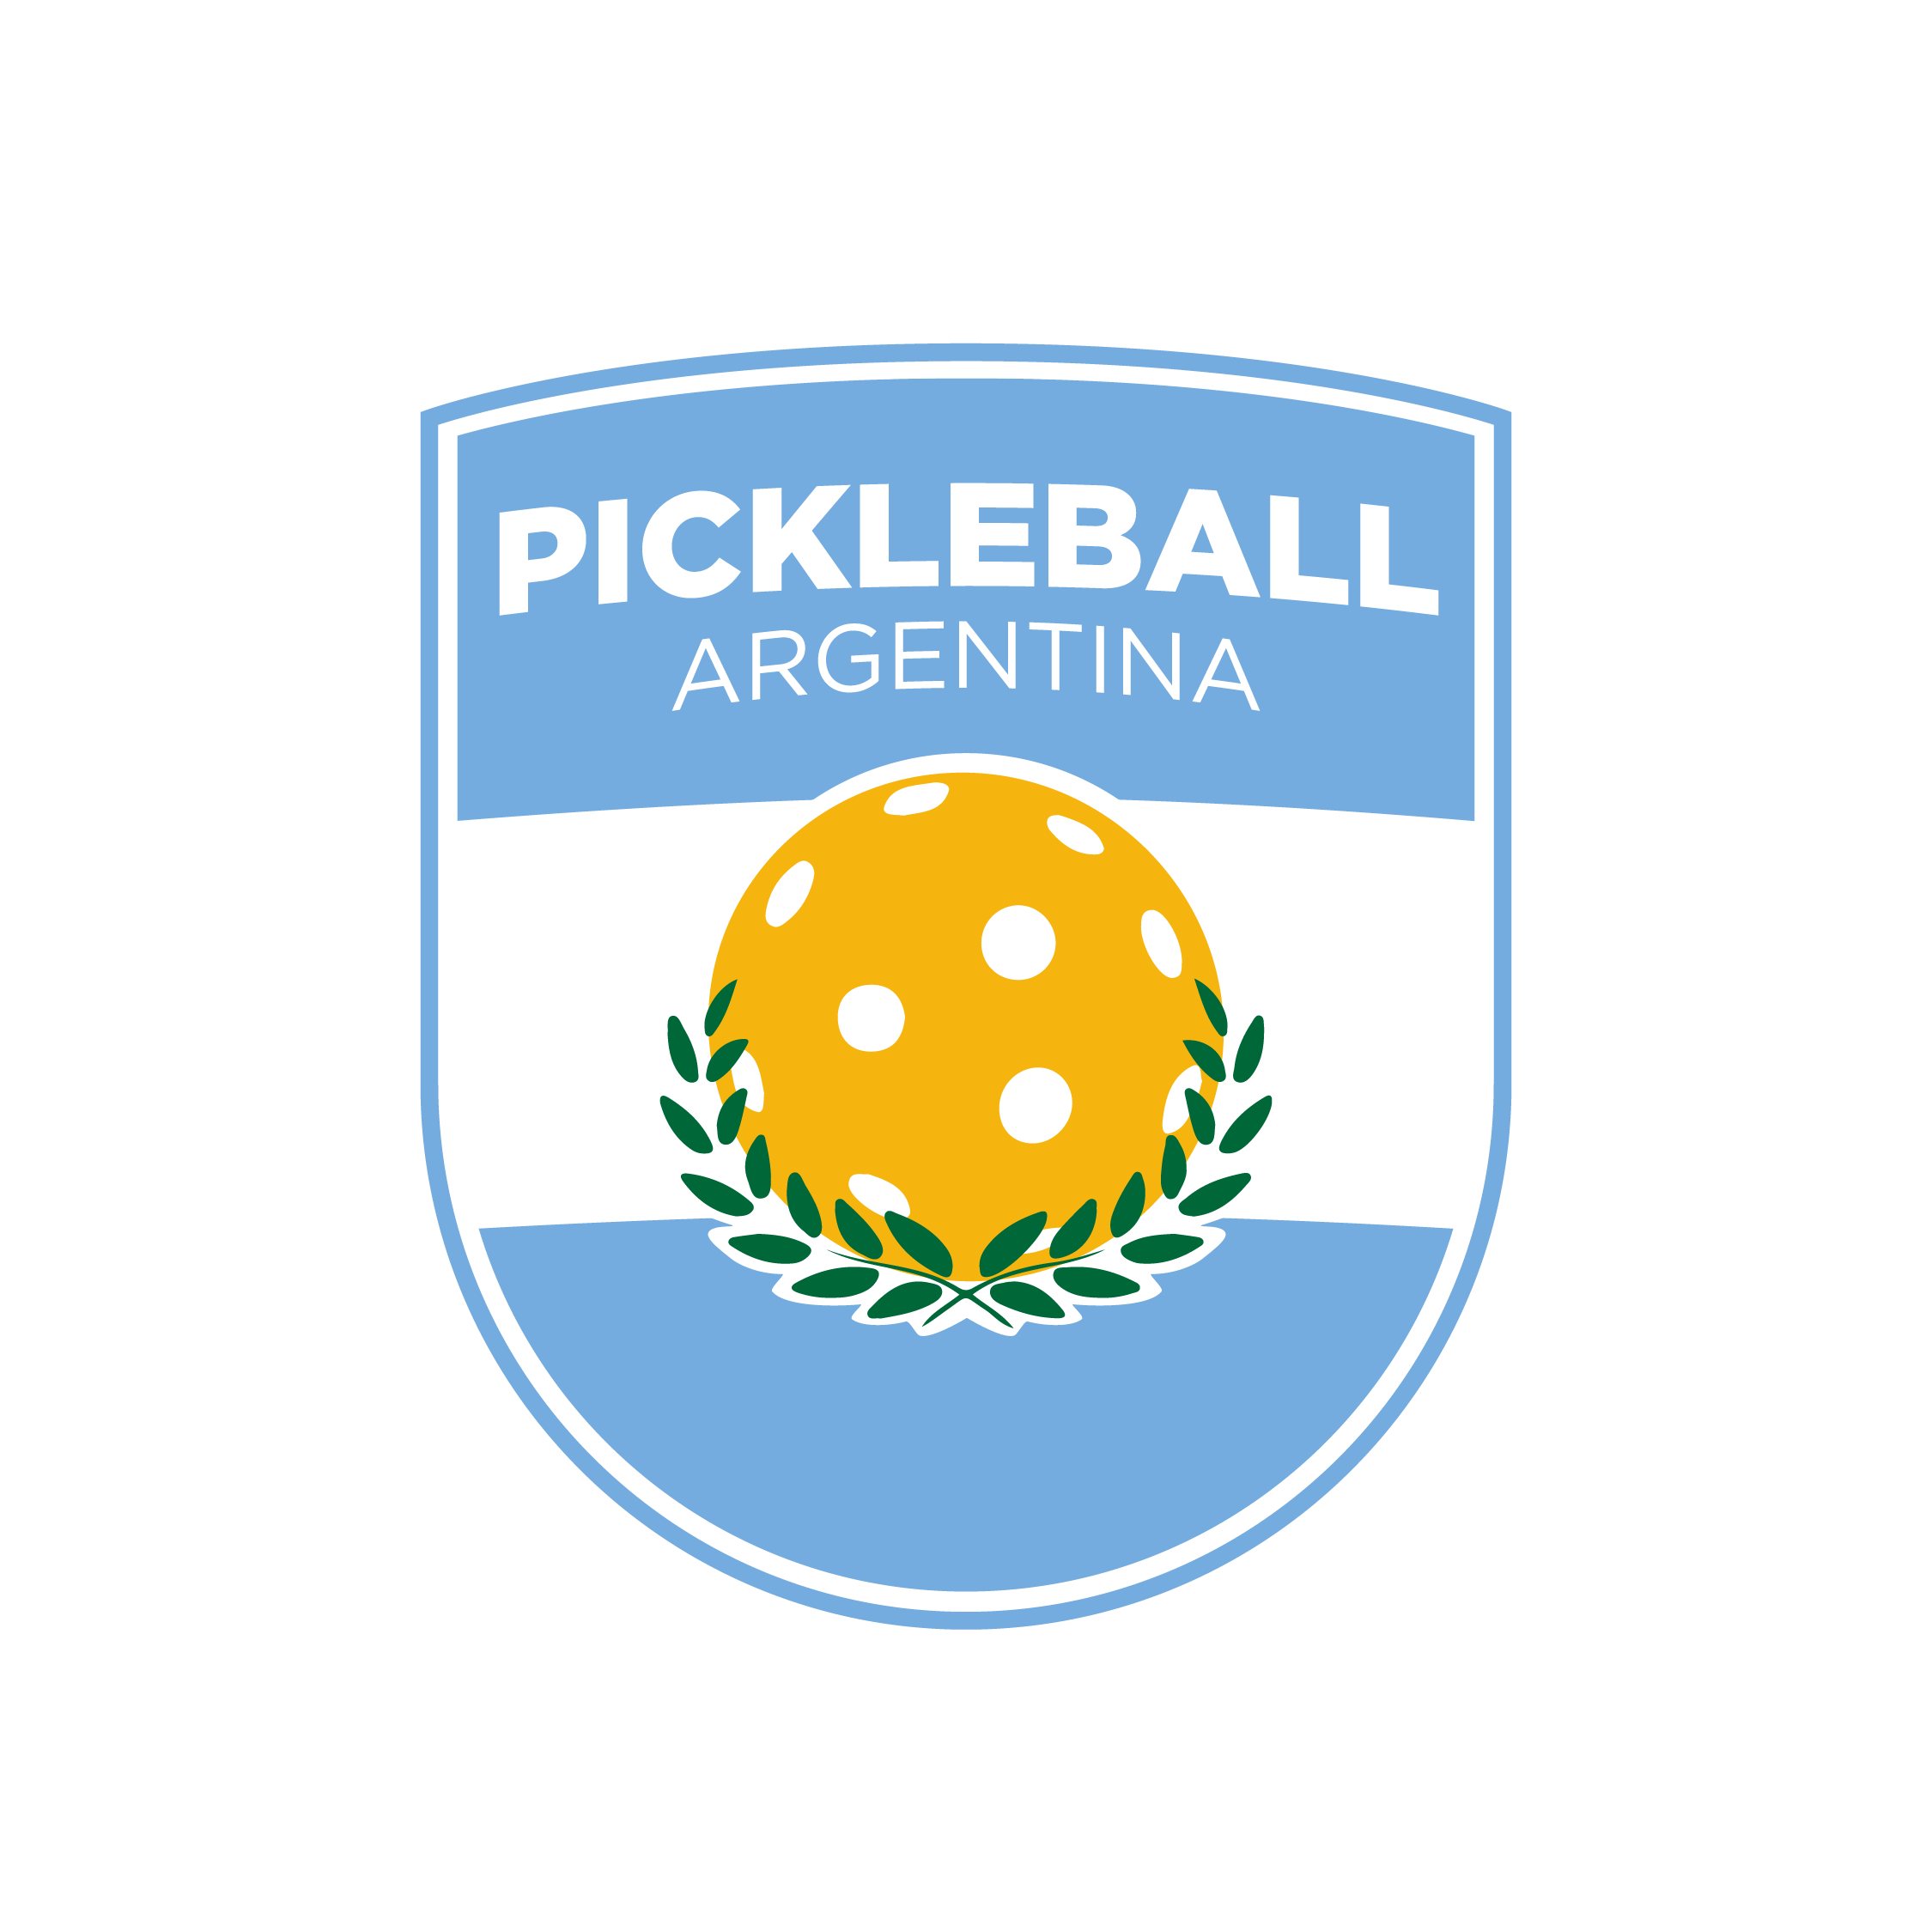 Pickleball Argentina logo